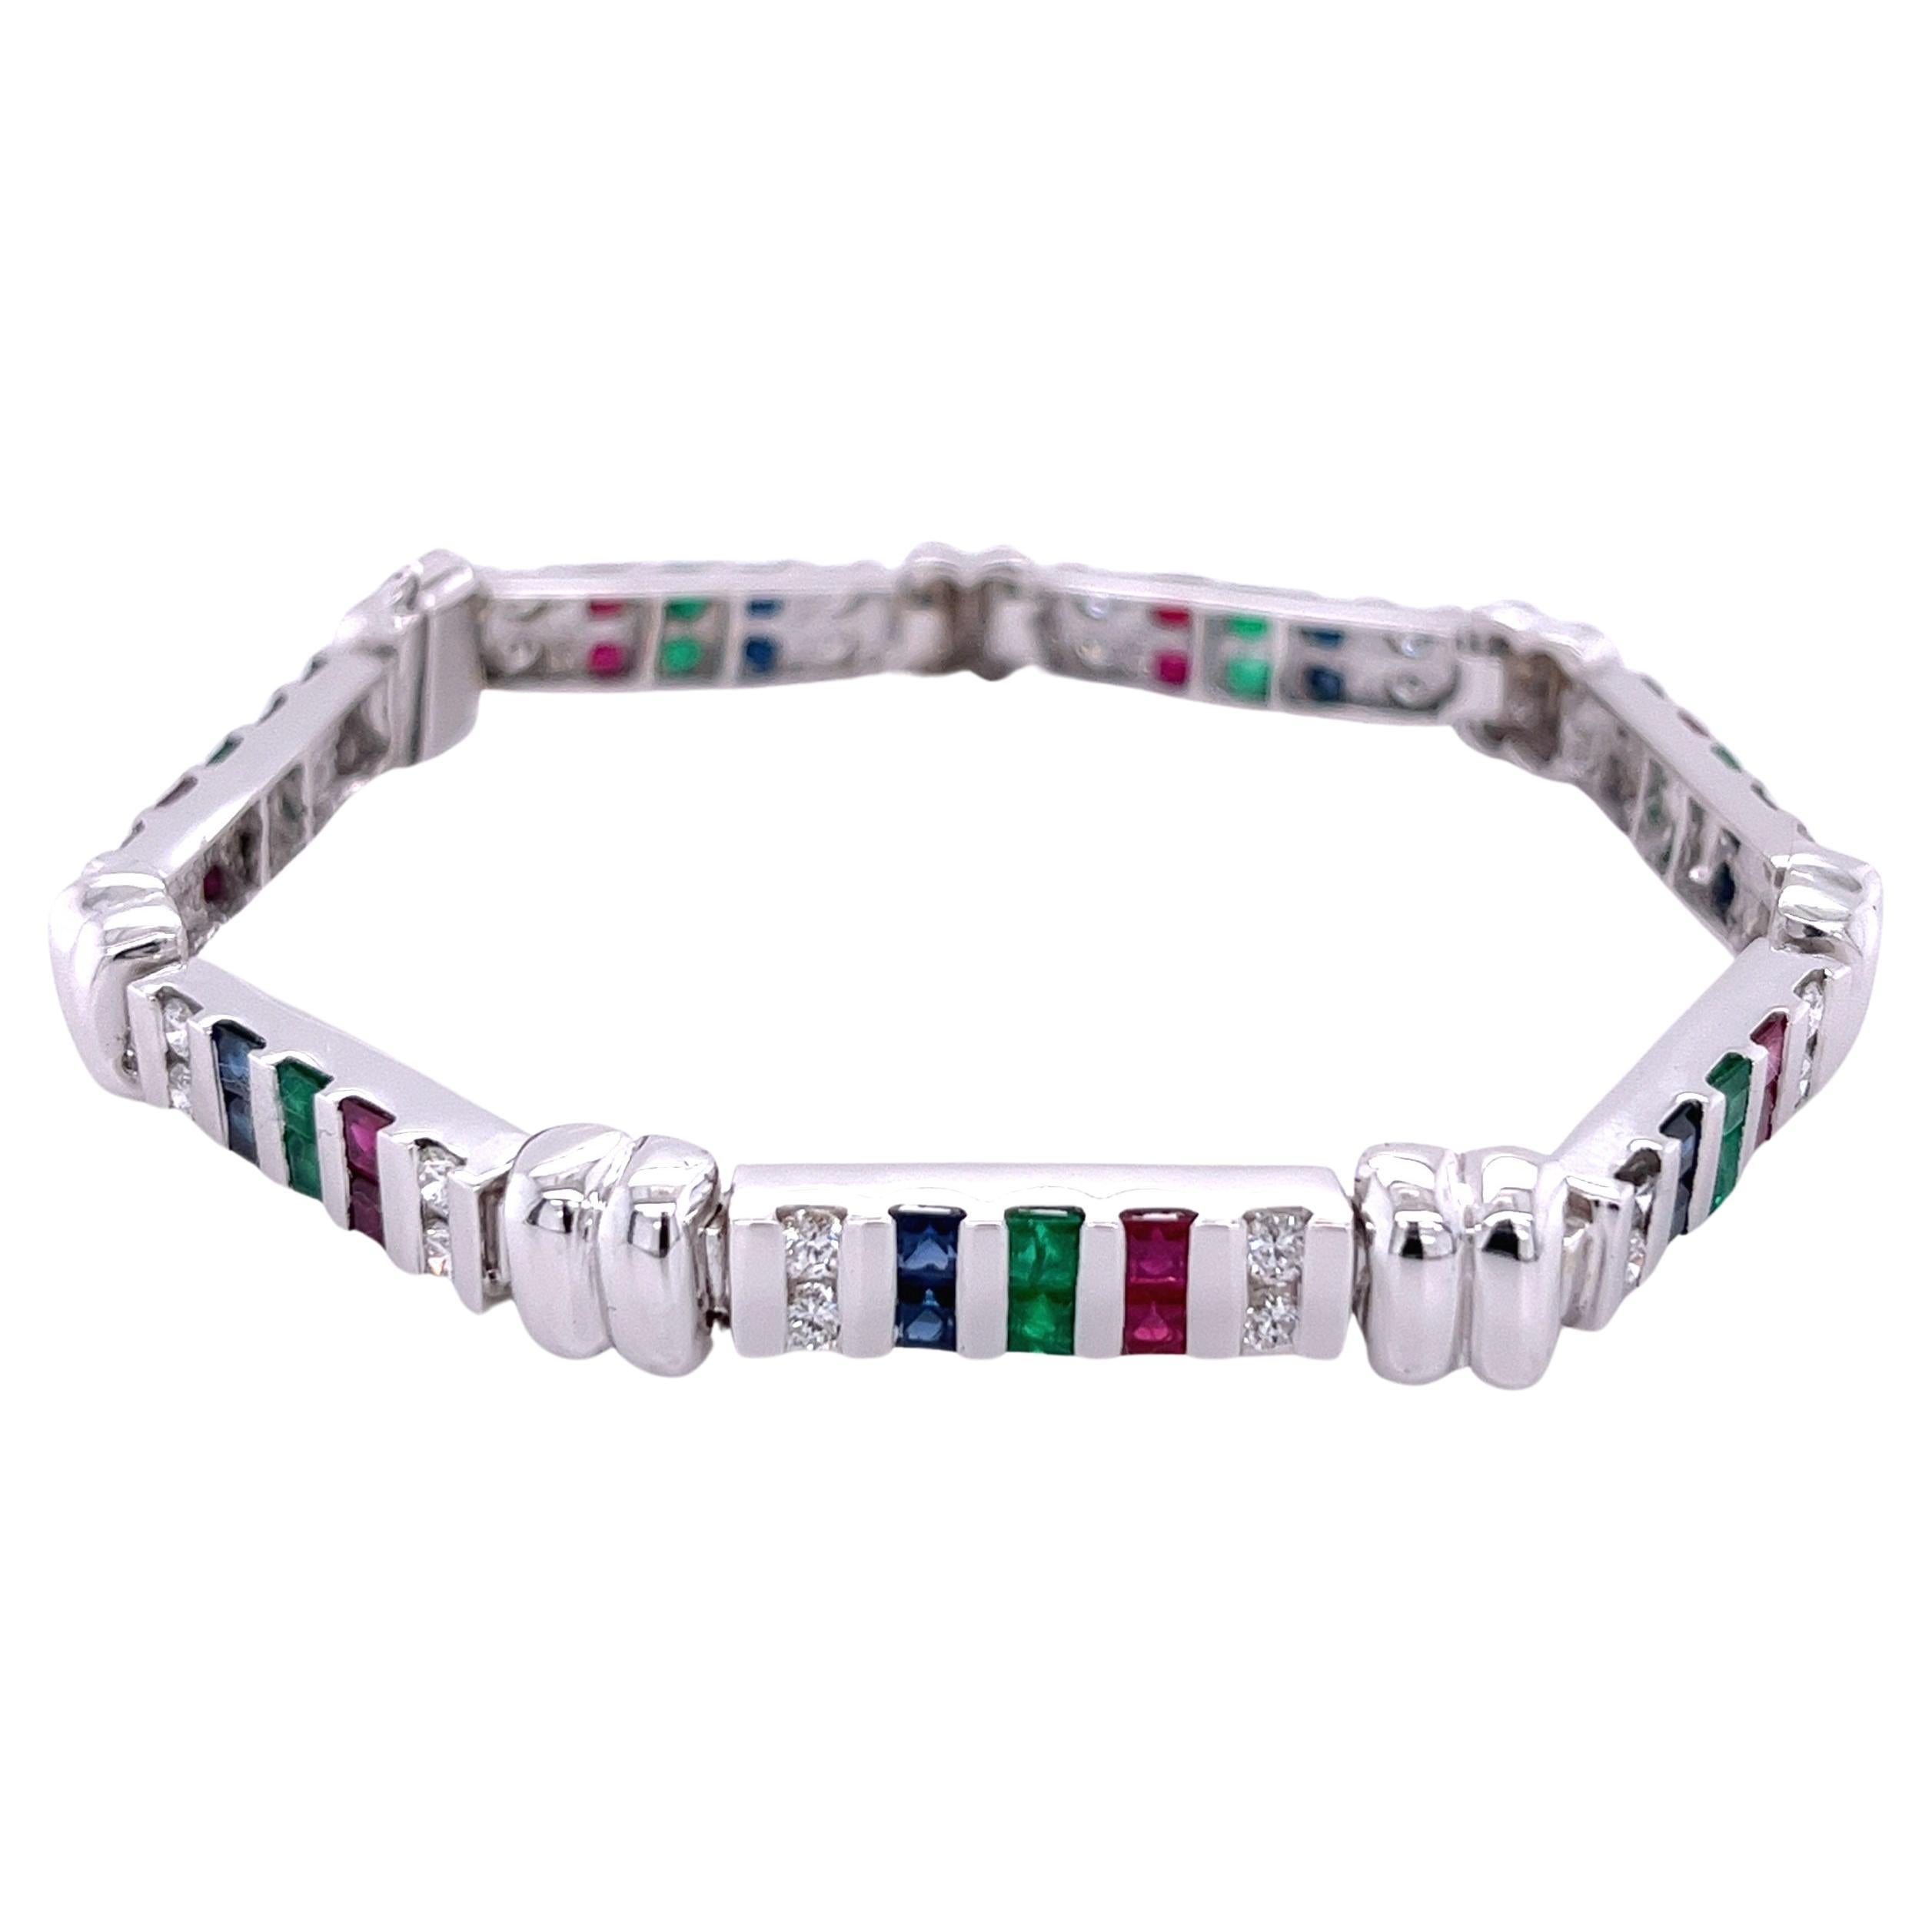 12 Carat Diamond, Ruby, Emerald and Sapphire 18K White Gold Bracelet